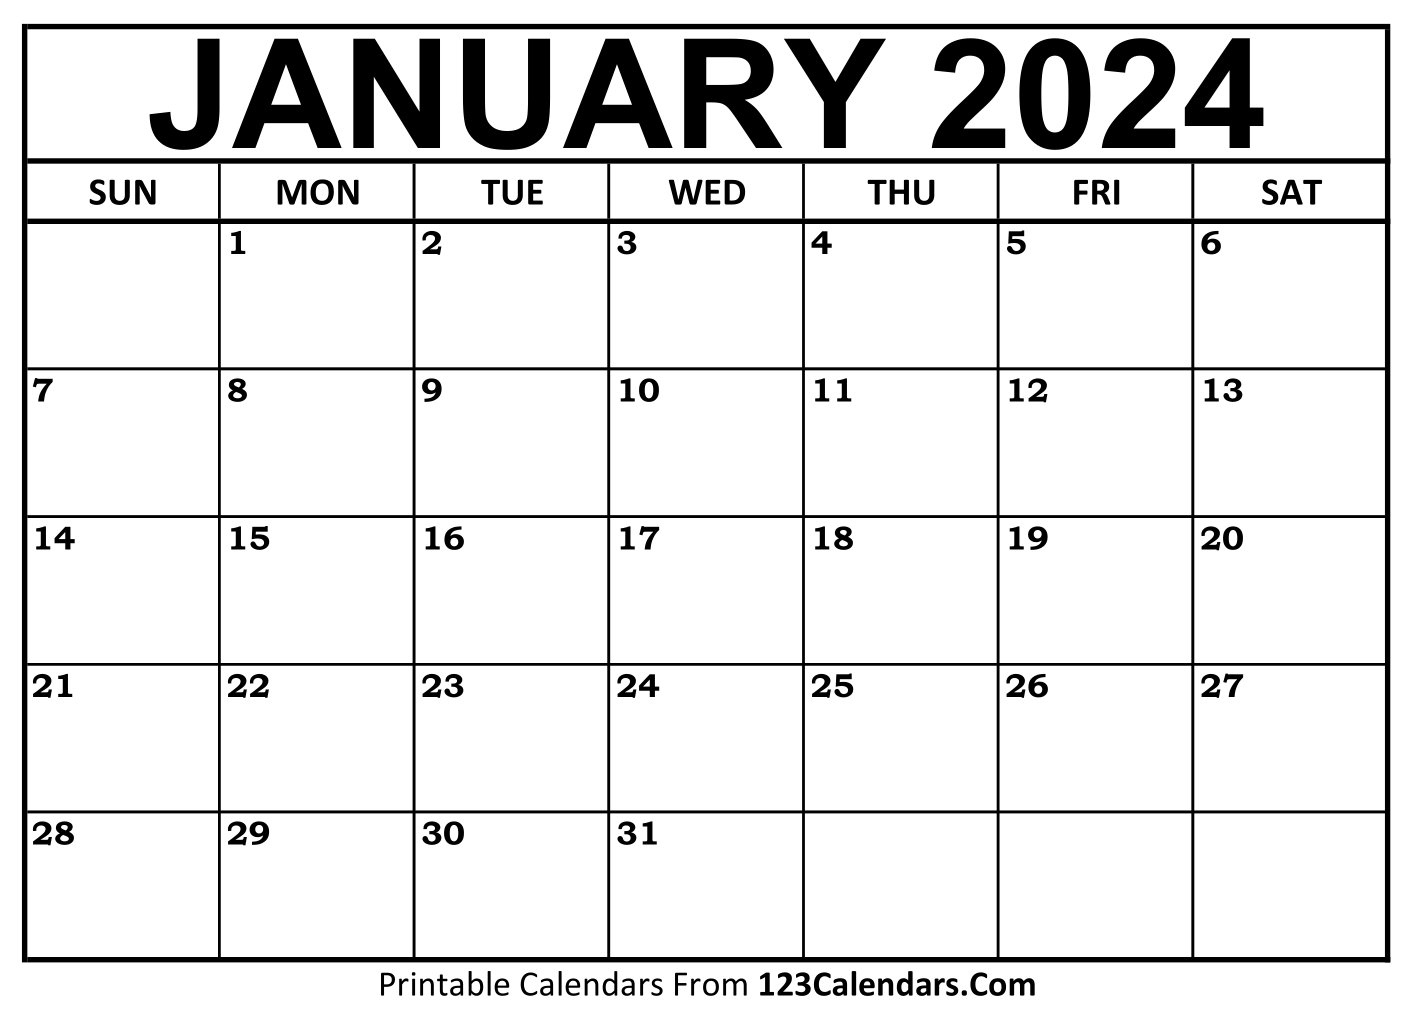 Printable January 2024 Calendar Templates - 123Calendars | Wiki Printable Calendar 2024